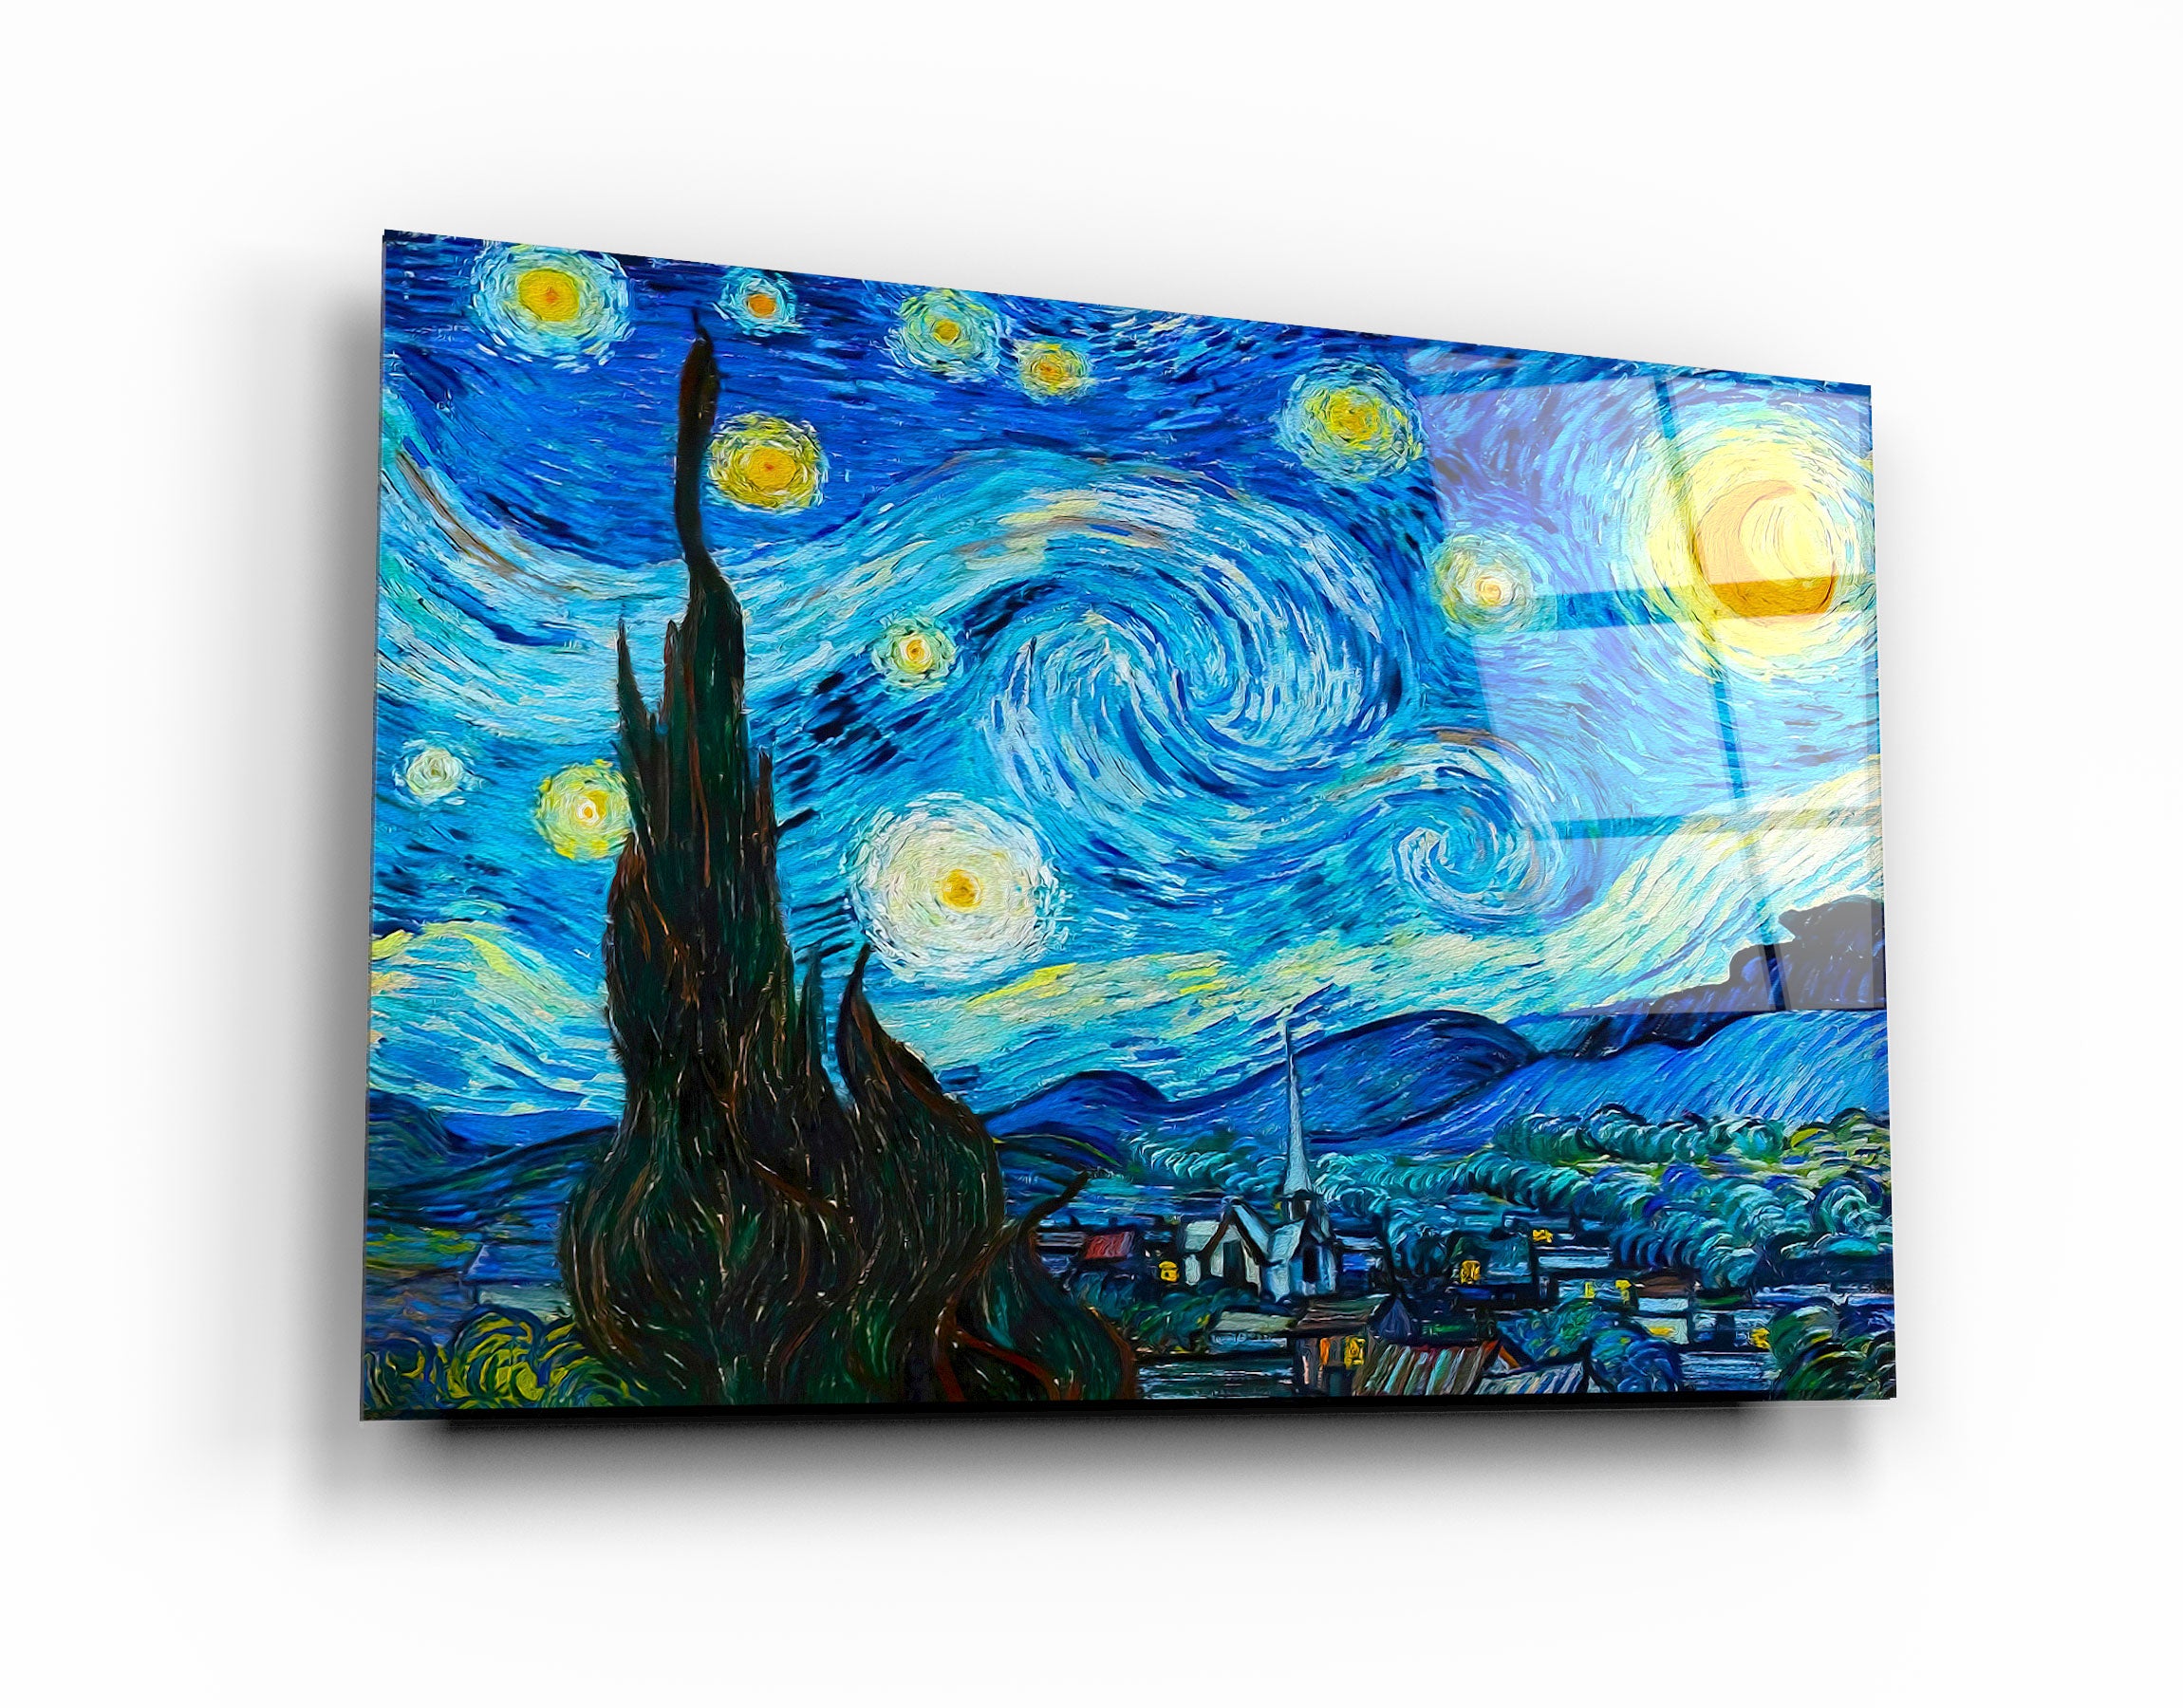 ・"Van Gogh The Starry Night"・Glass Wall Art